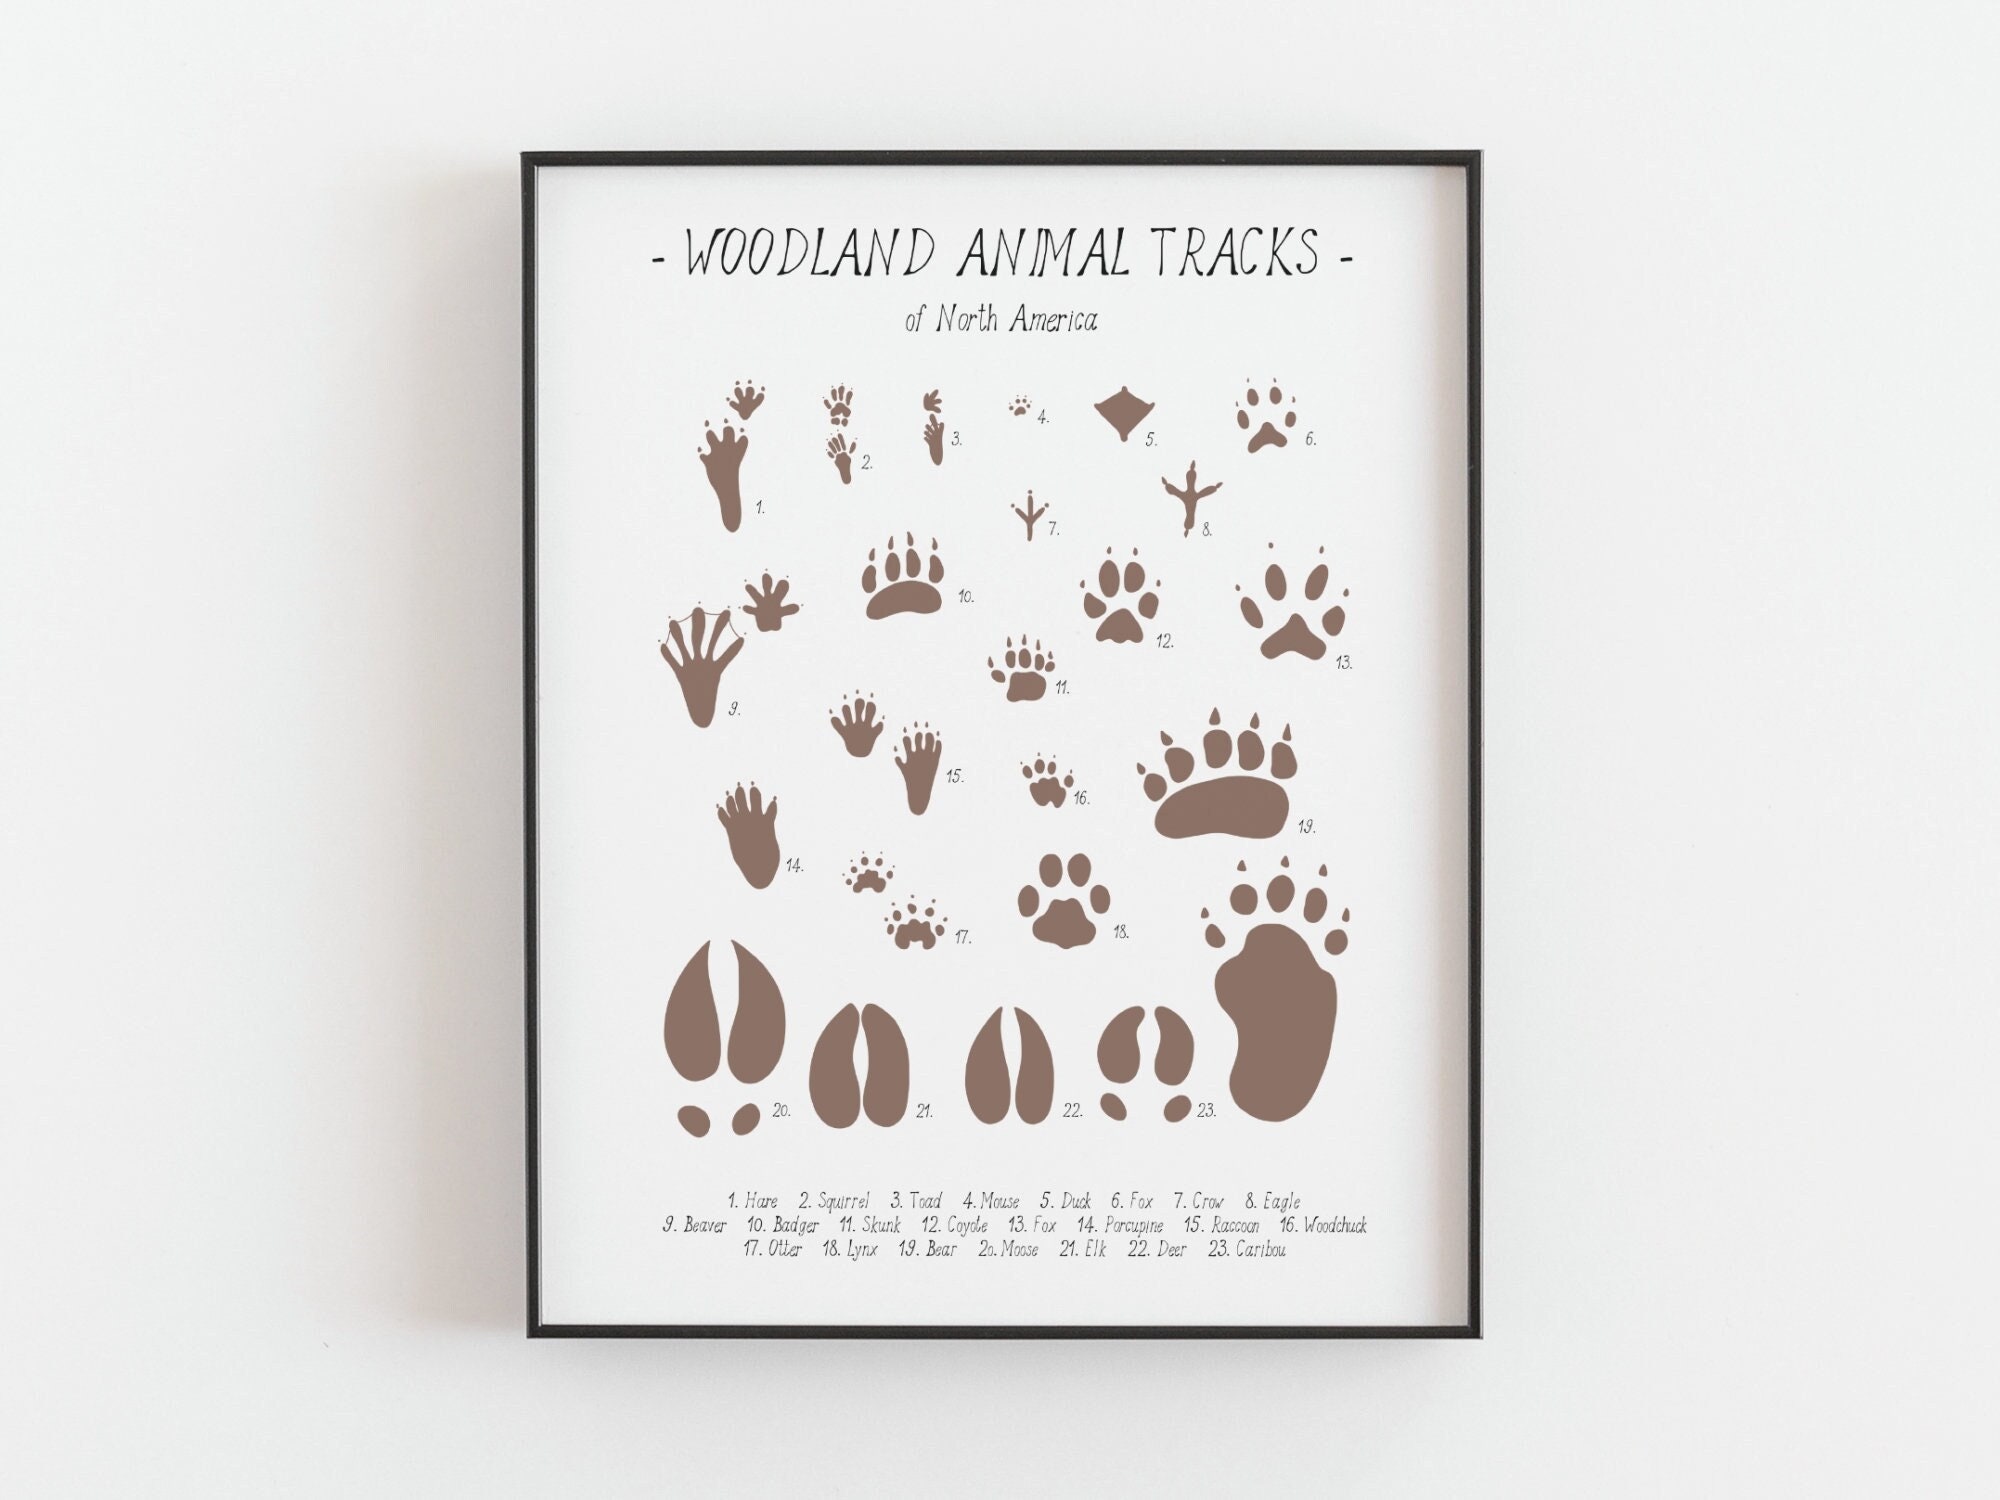 Poster - Animal Tracks of the Sierra Nevada